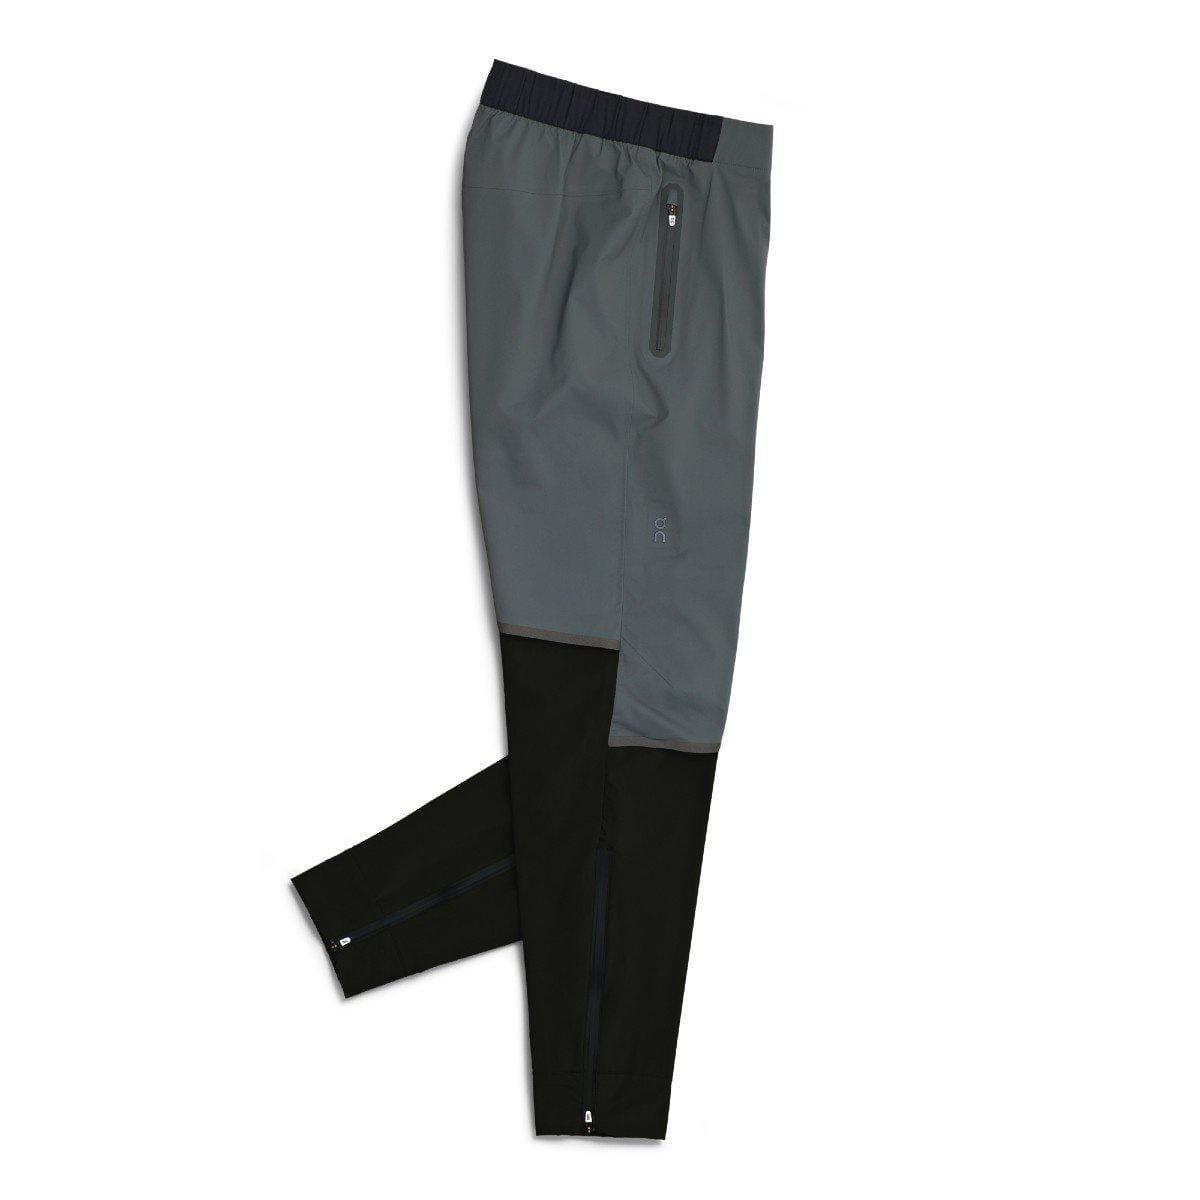 NIKE TECH POWER Phenom Trousers Running Trousers Pants 2 Mens RRP 80  4500  PicClick UK